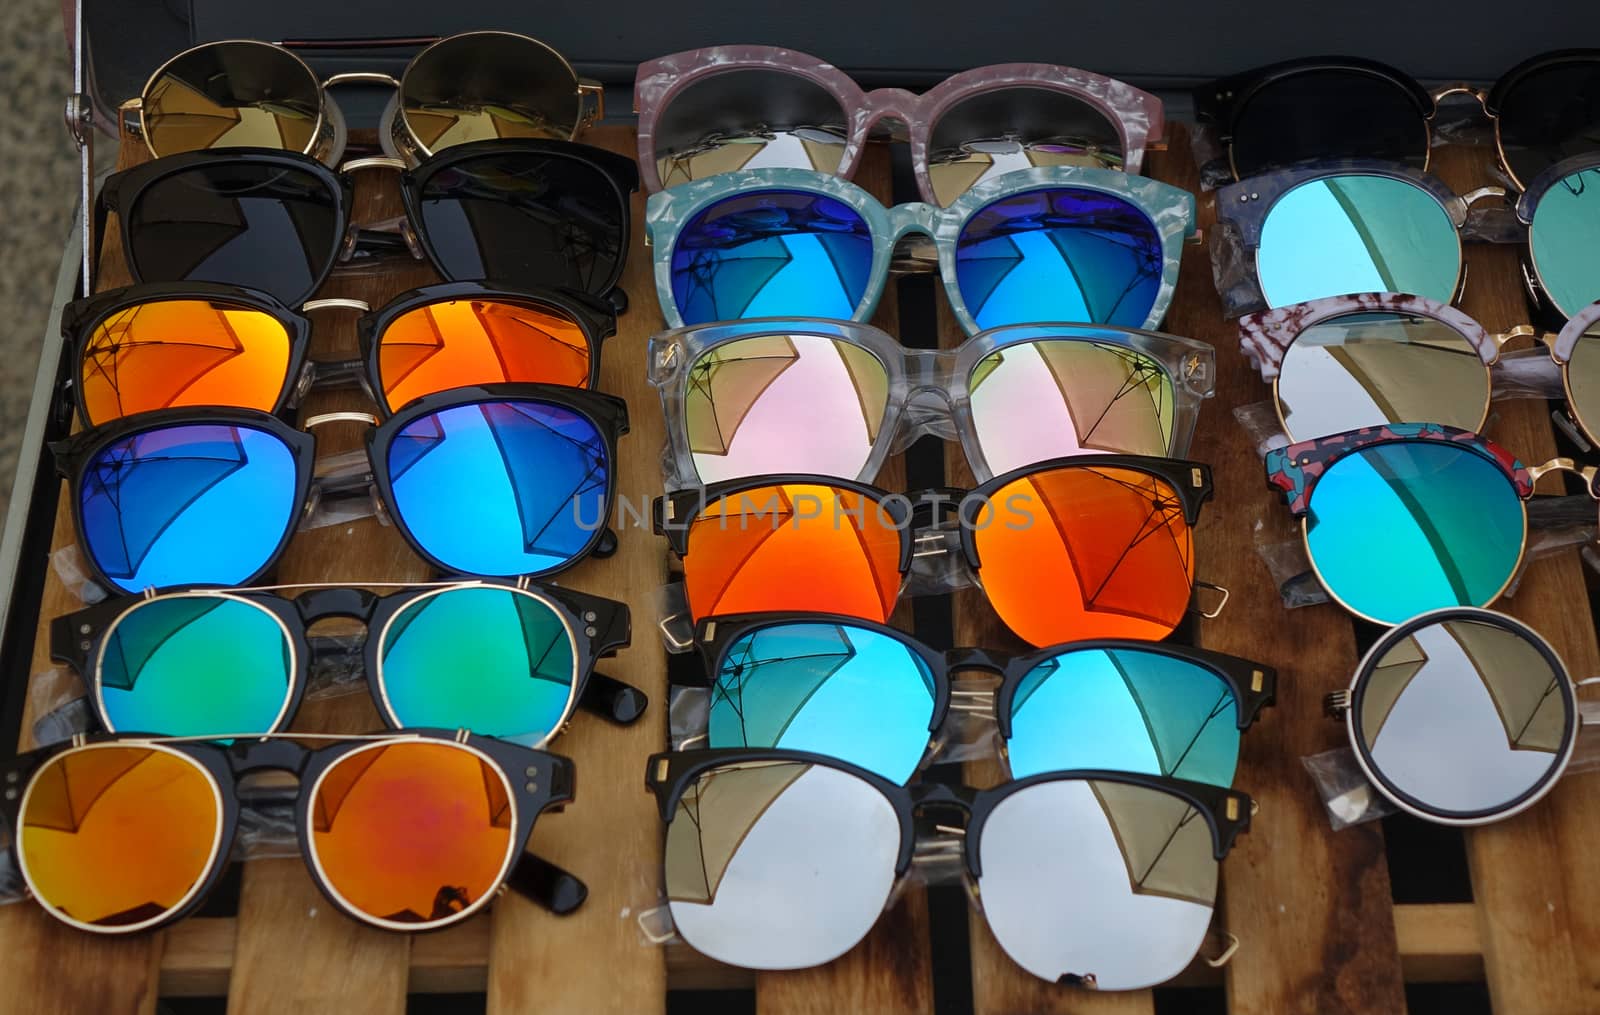 An outdoor vendor at a tourist market sells reflecting sunglasses.